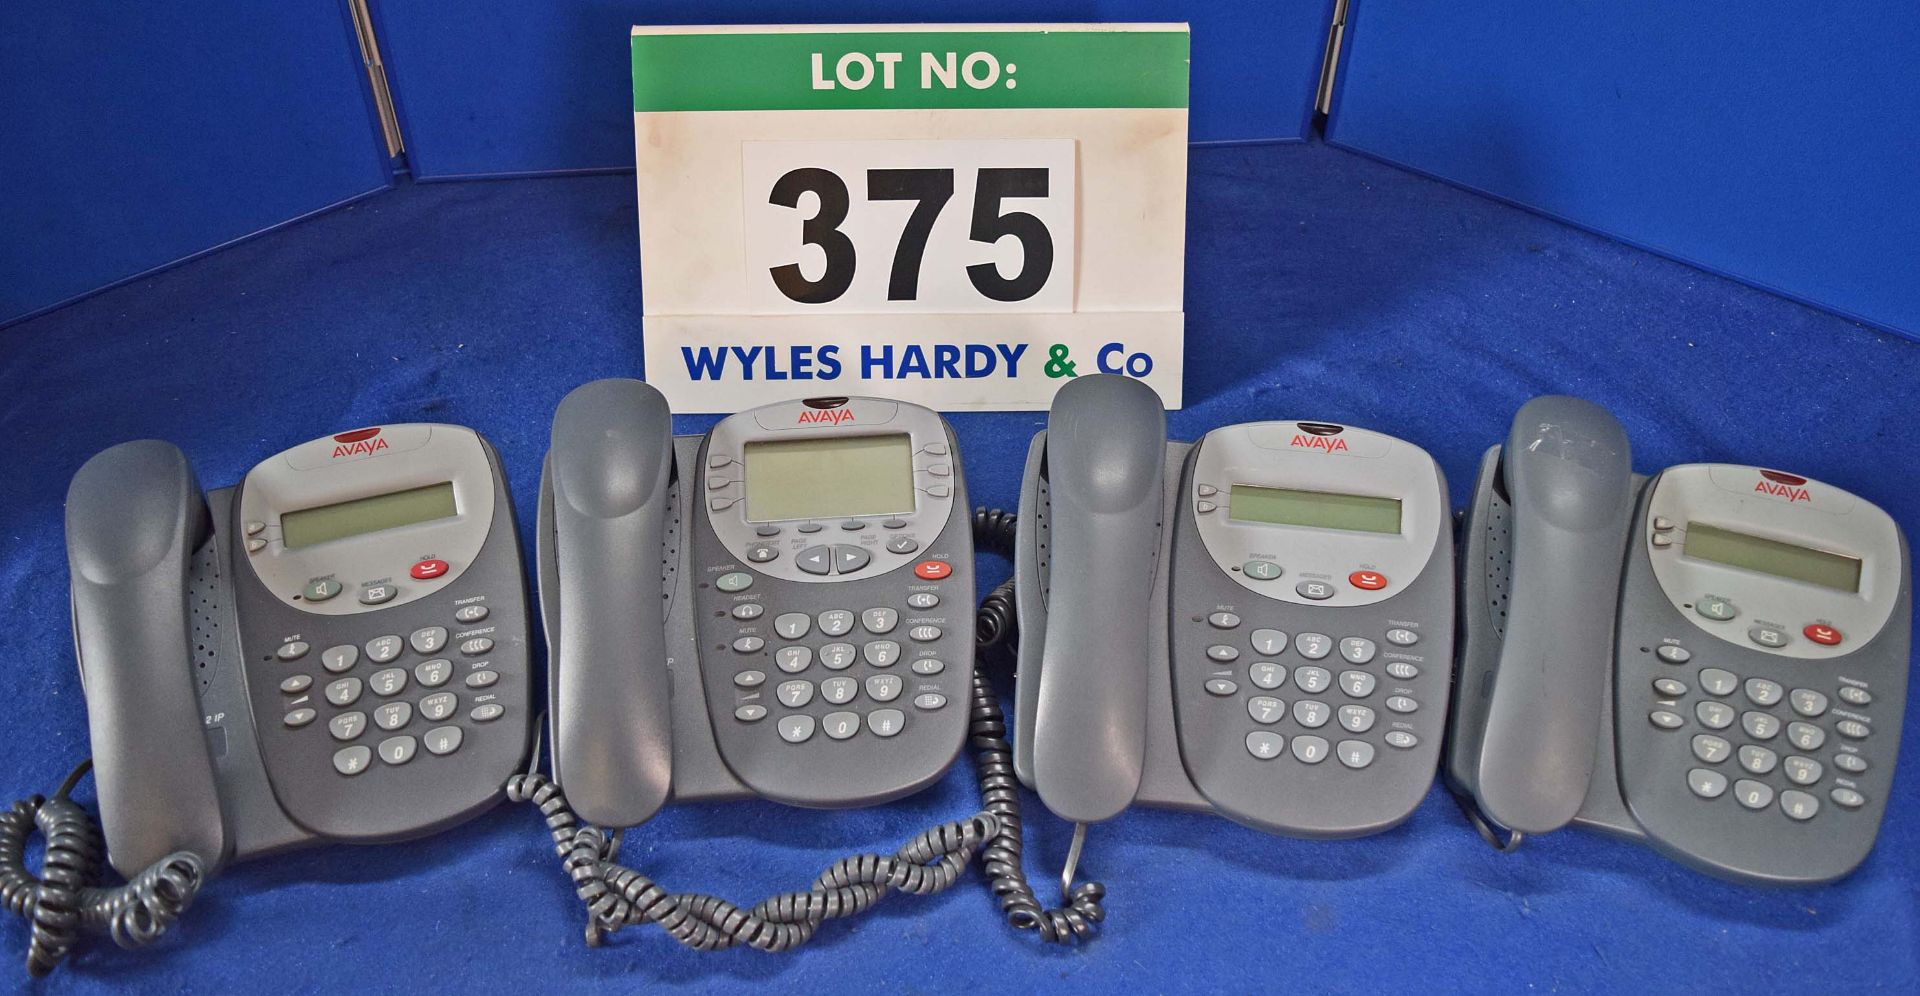 22: AVAYA IP Telephone Handsets Comprising 1: Model 4602IP, 1:Model 4602SWIP, 9: Model 4602SW+IP, 6: